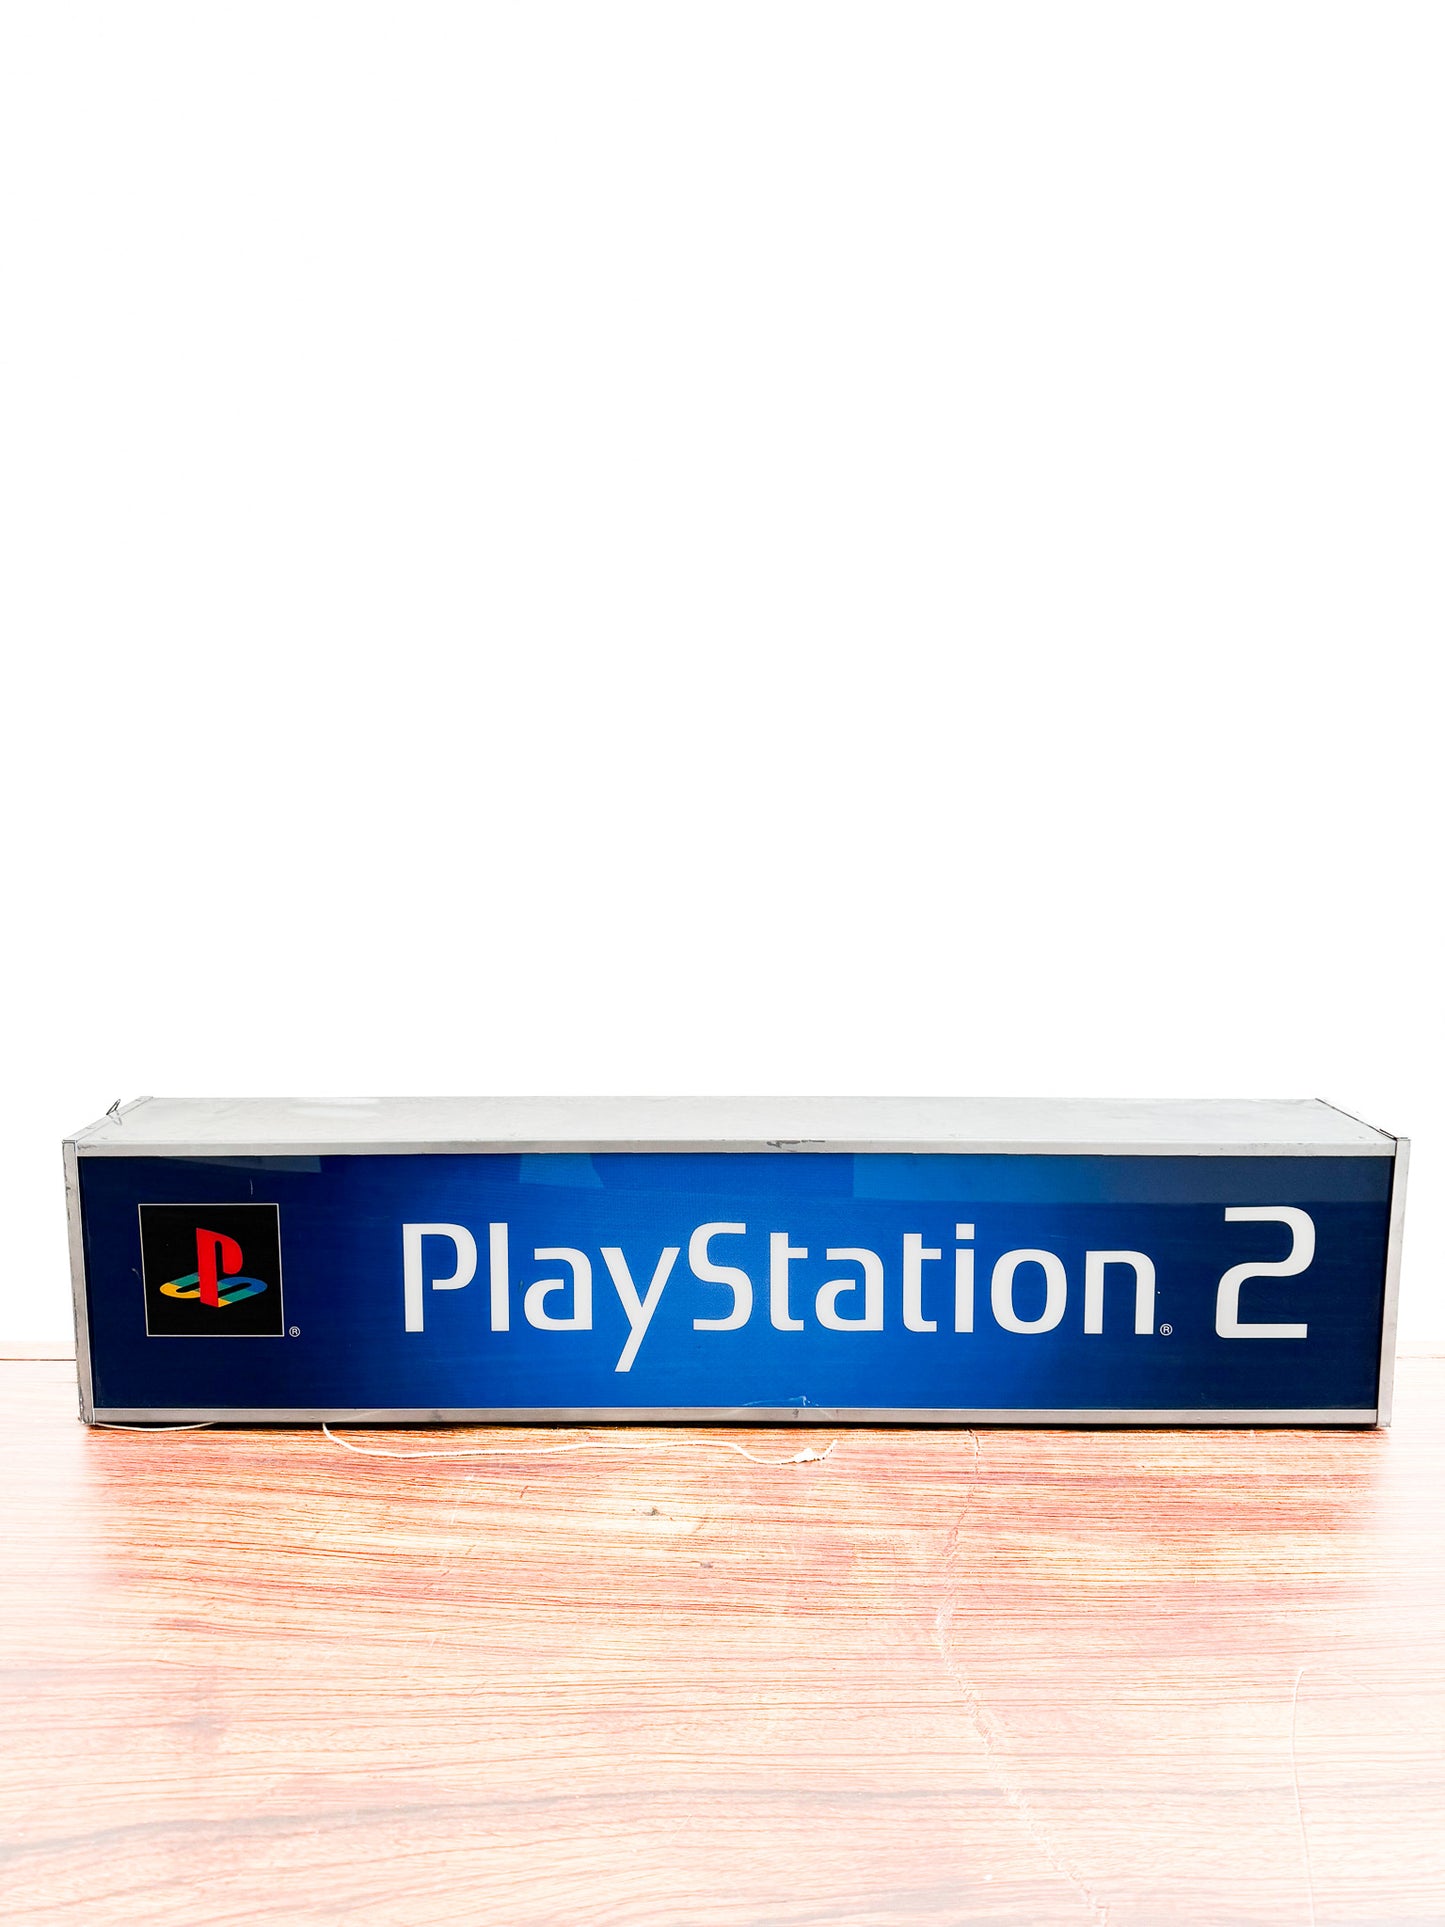 PlayStation 2 Illuminated Promotional Sign